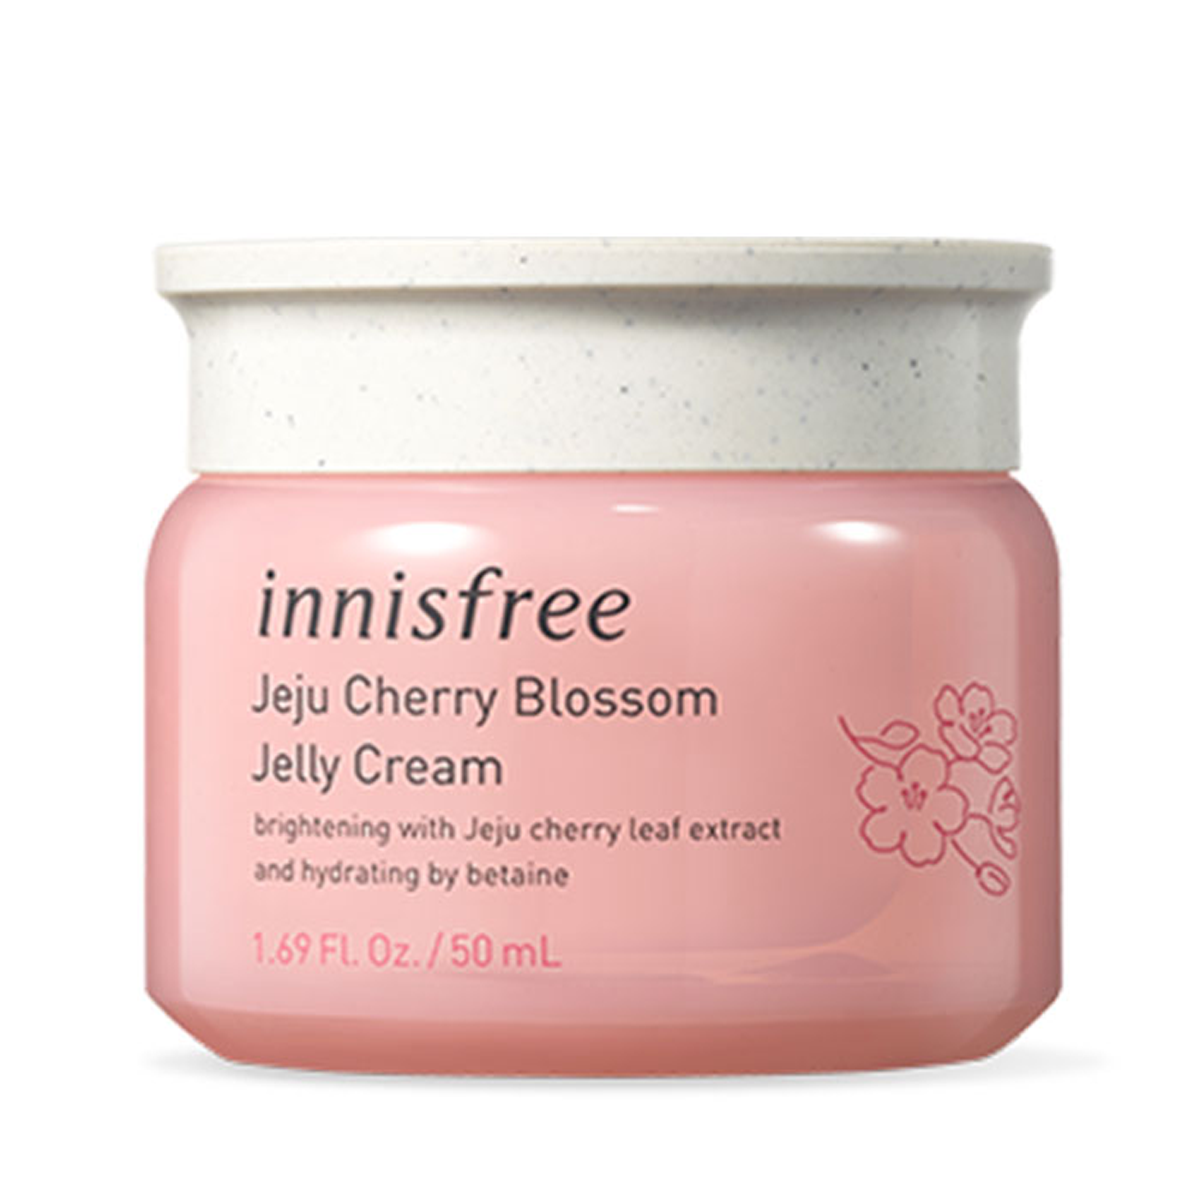 innisfree - Cherry Blossom Glow Jelly Cream